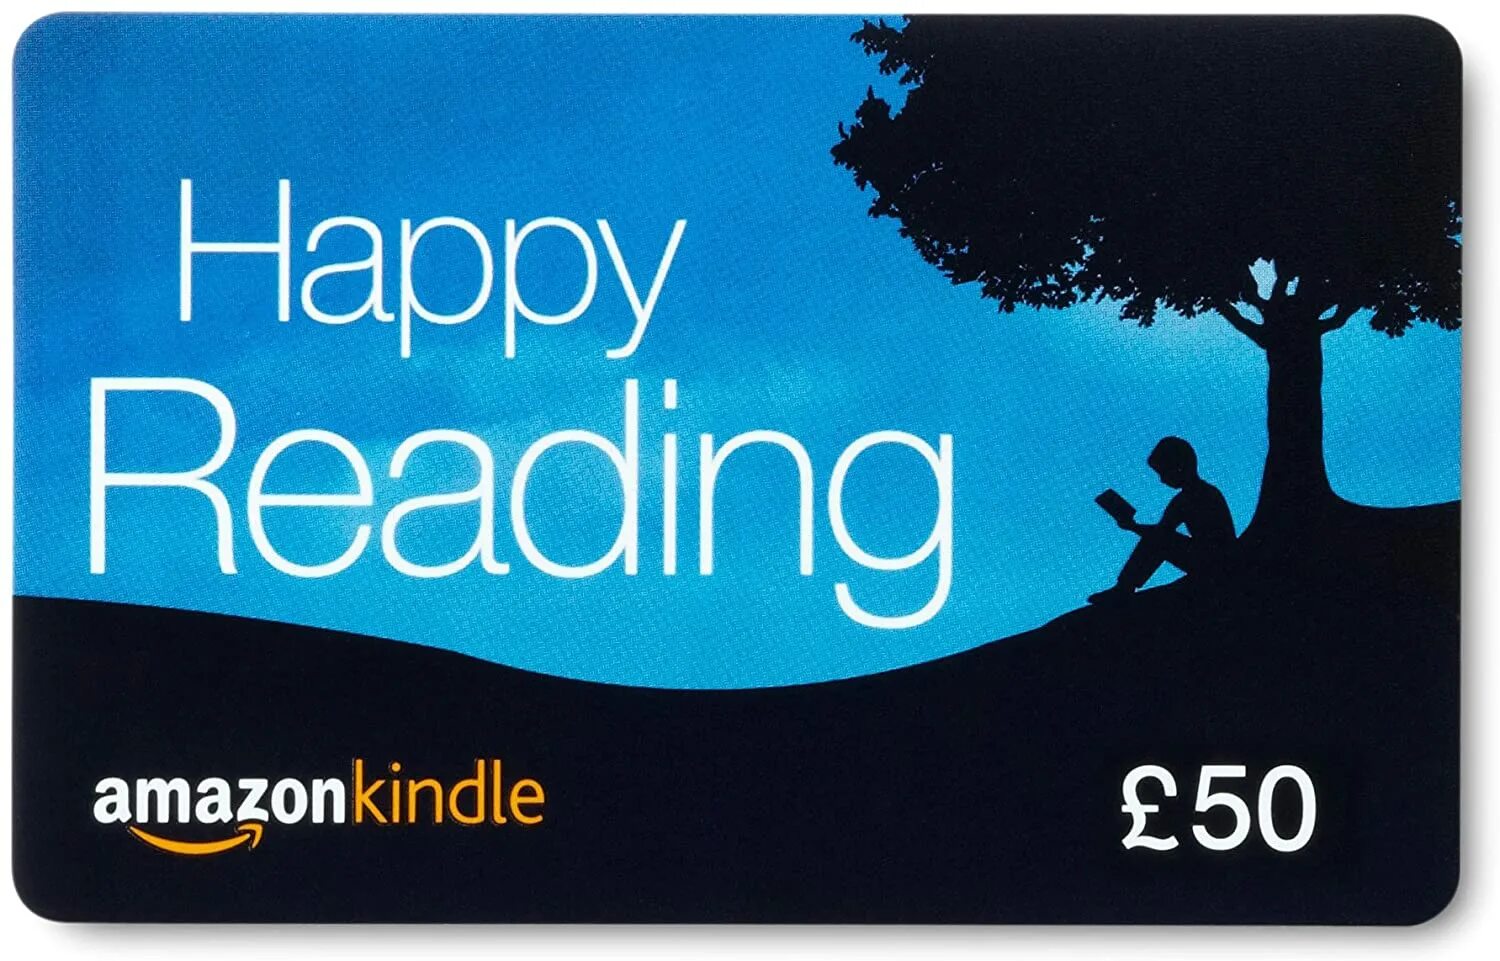 Amazon reading. Amazon Kindle app Greetings. Happy reading. Happy Reader.